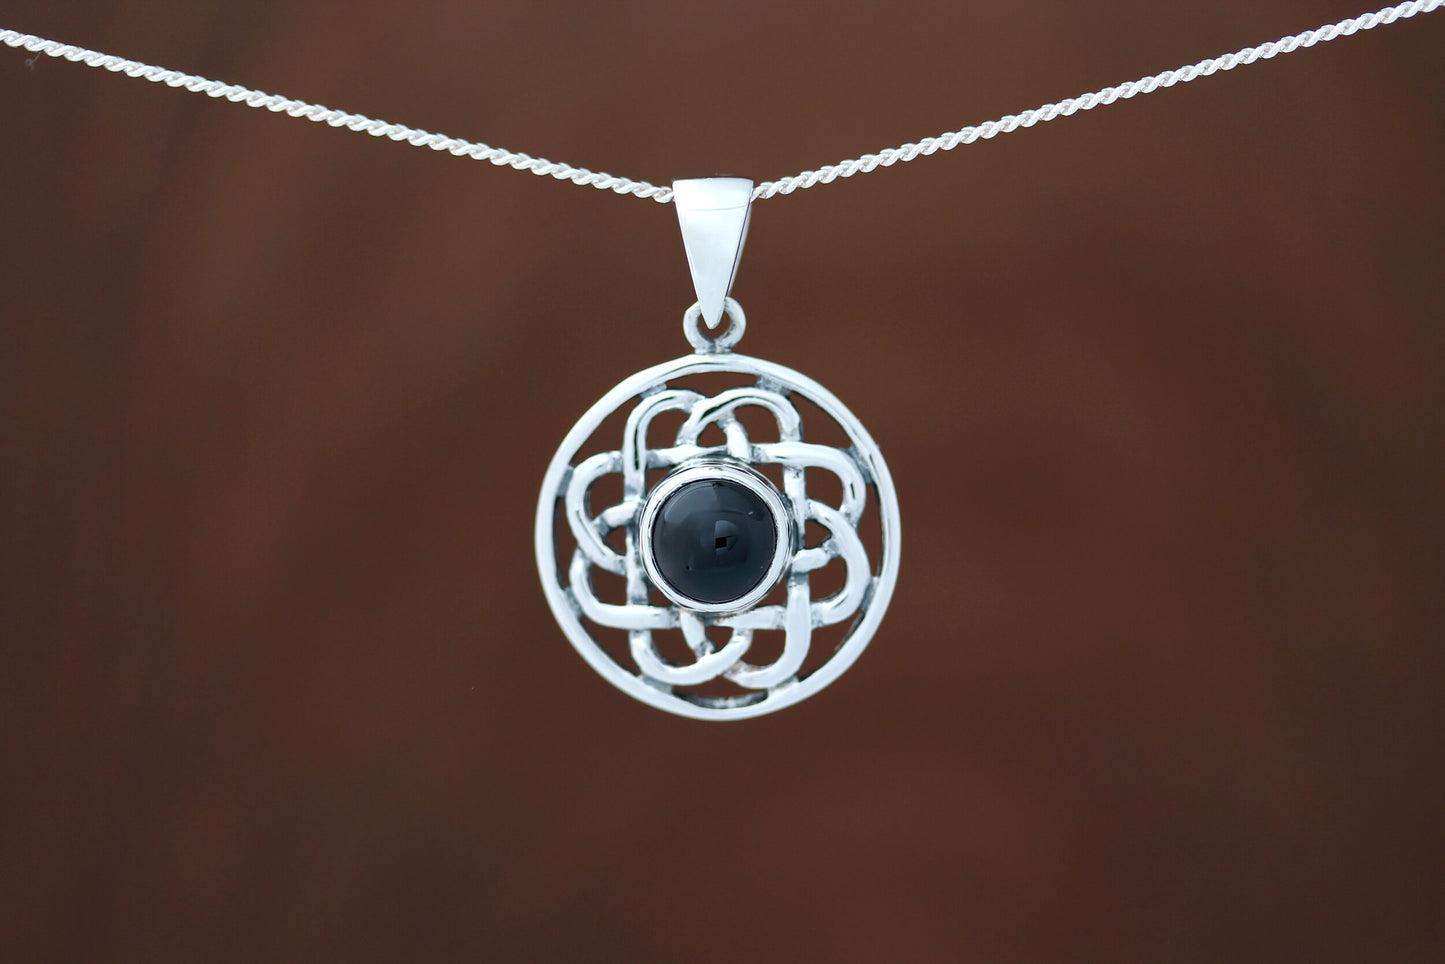 Celtic Stone Pendant - Flower Knot with Black Onyx